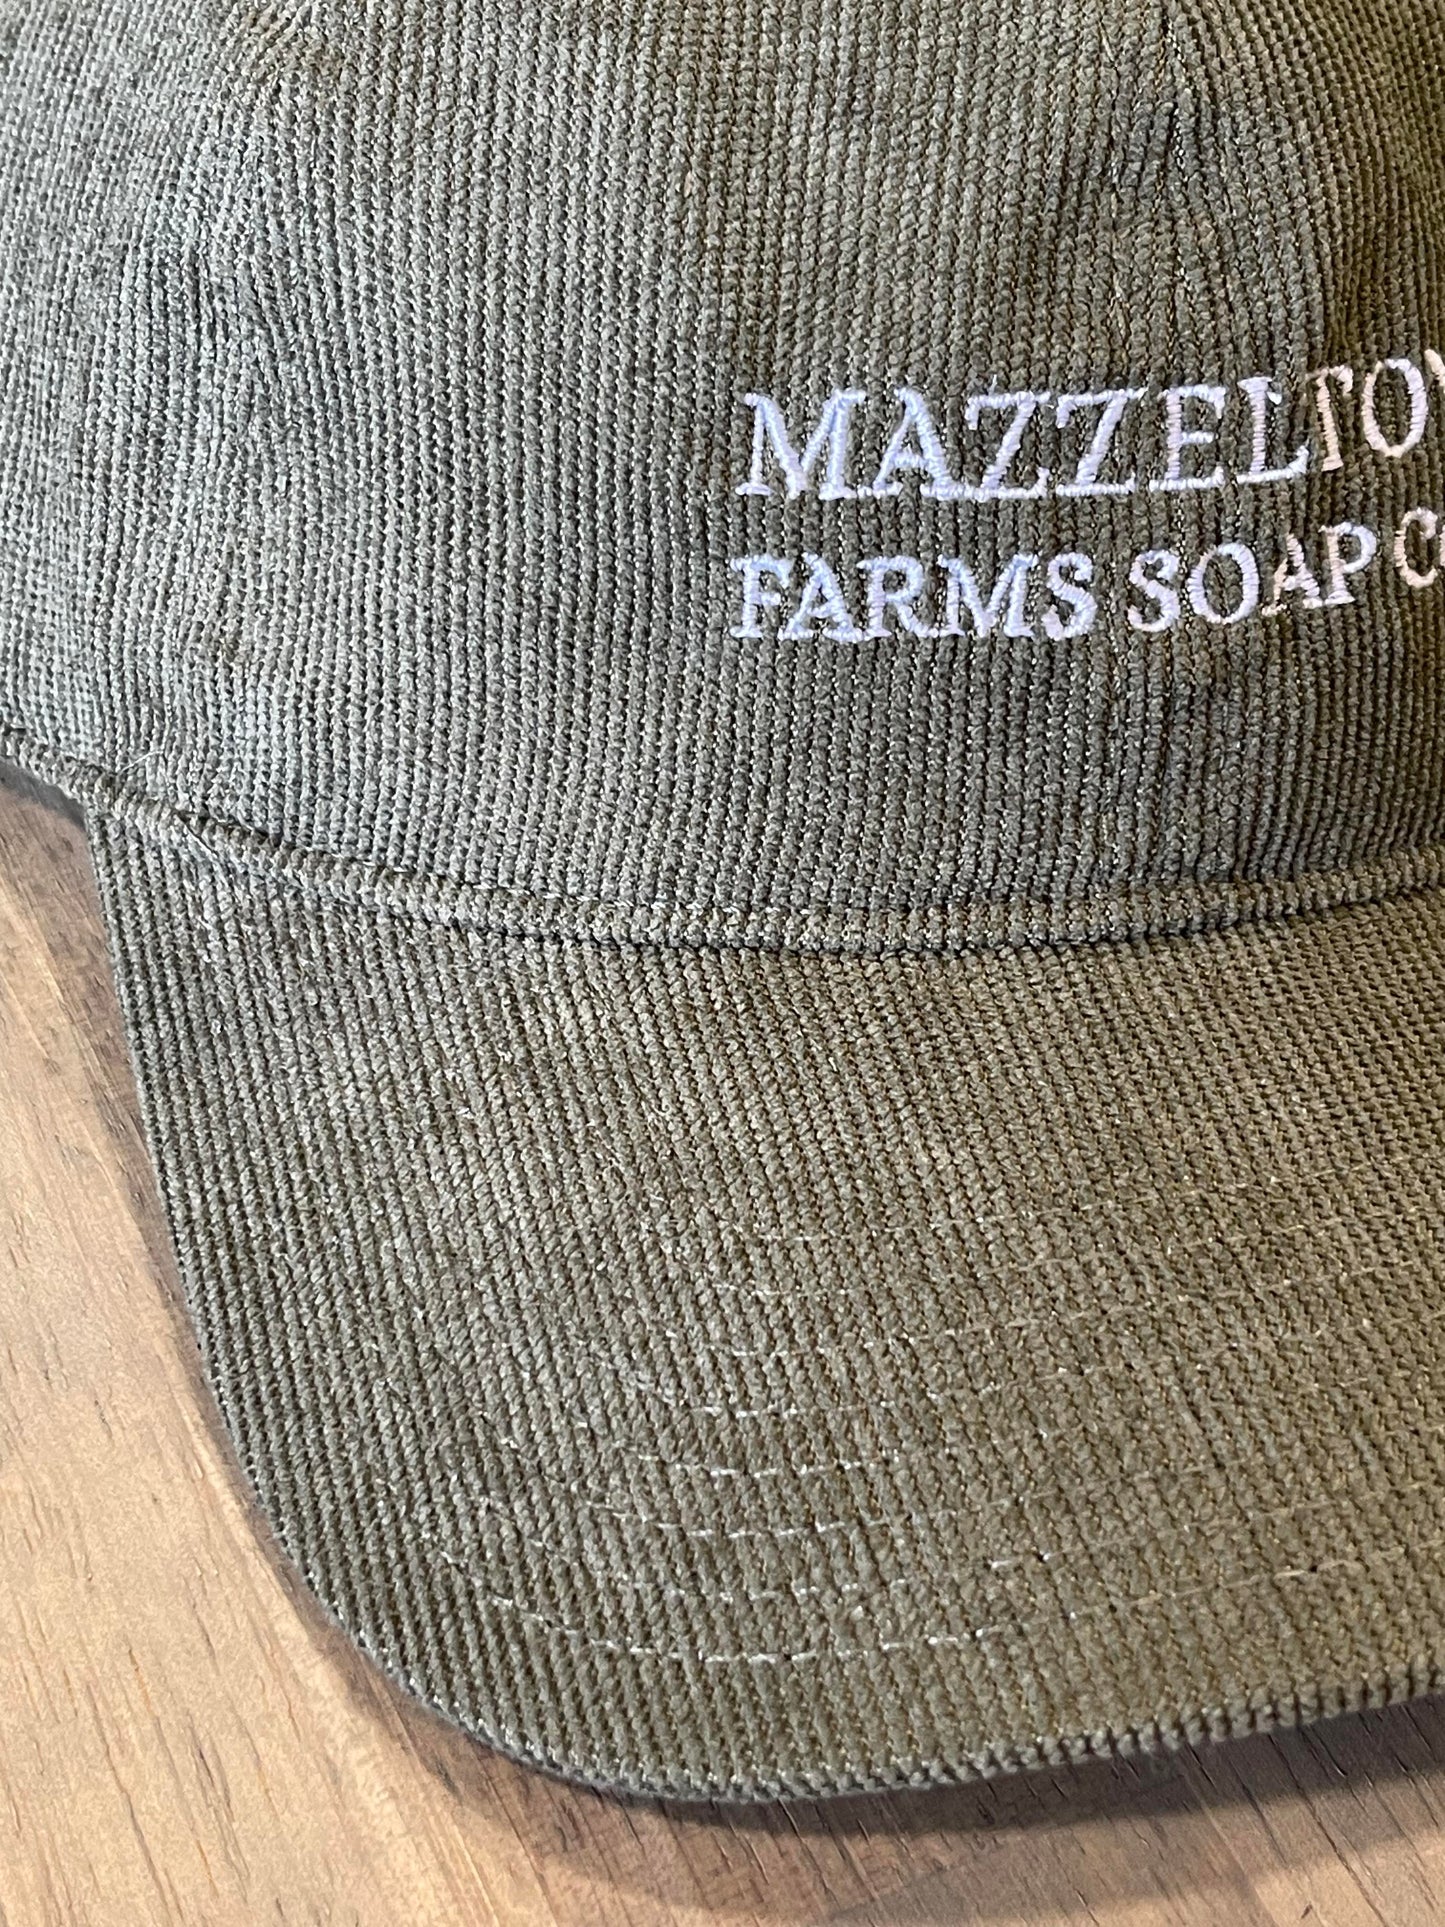 Mazzeltov Farms Corduroy Dad Cap